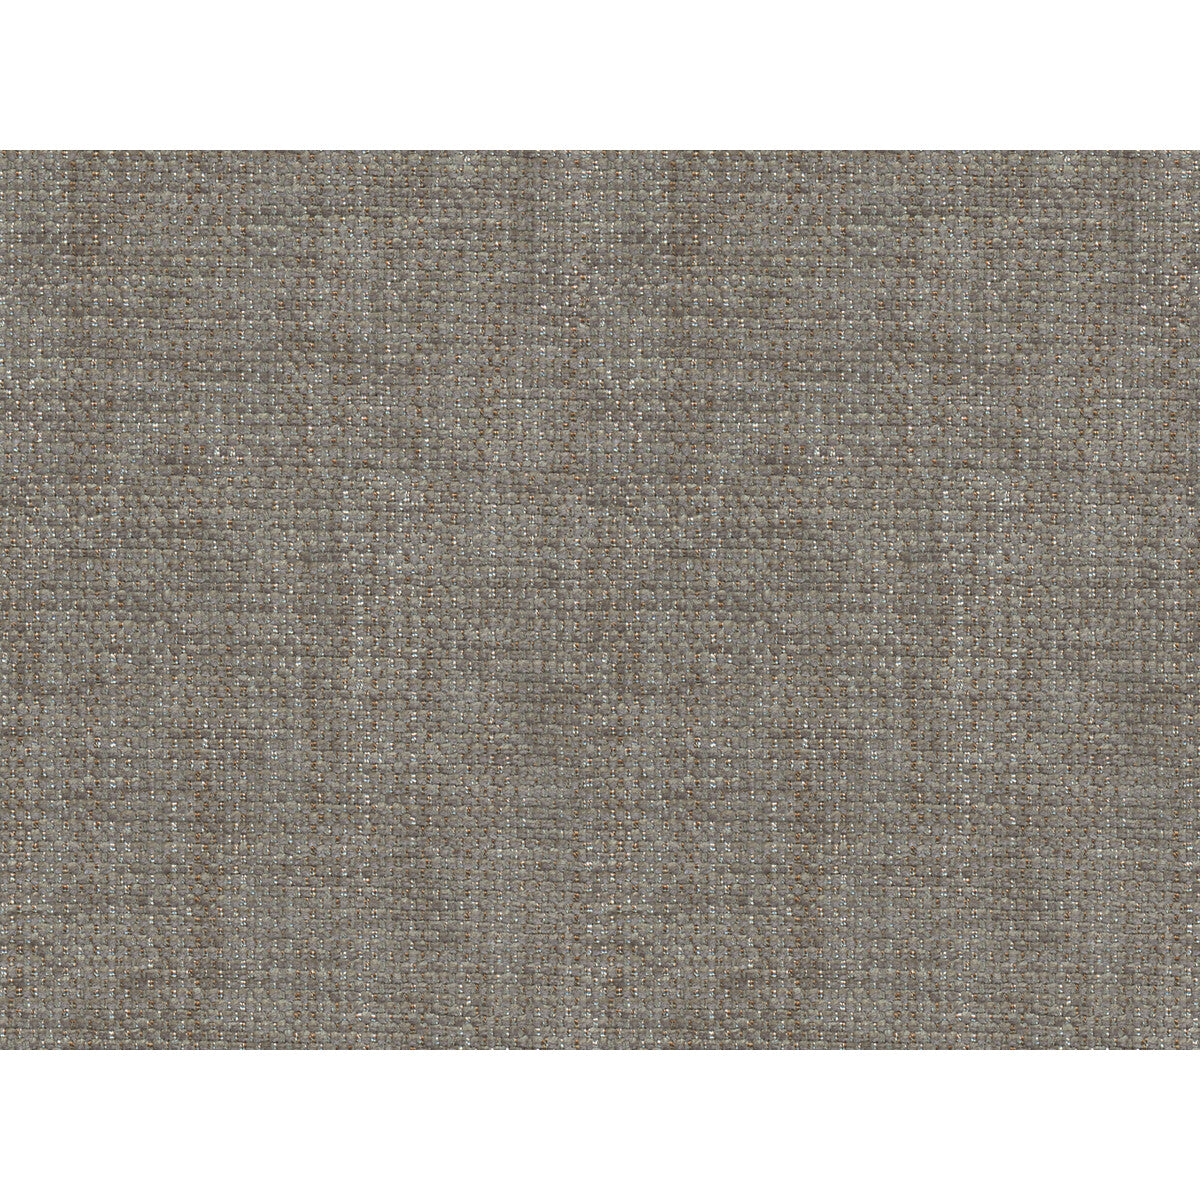 Kravet Smart fabric in 34730-106 color - pattern 34730.106.0 - by Kravet Smart in the Smart collection